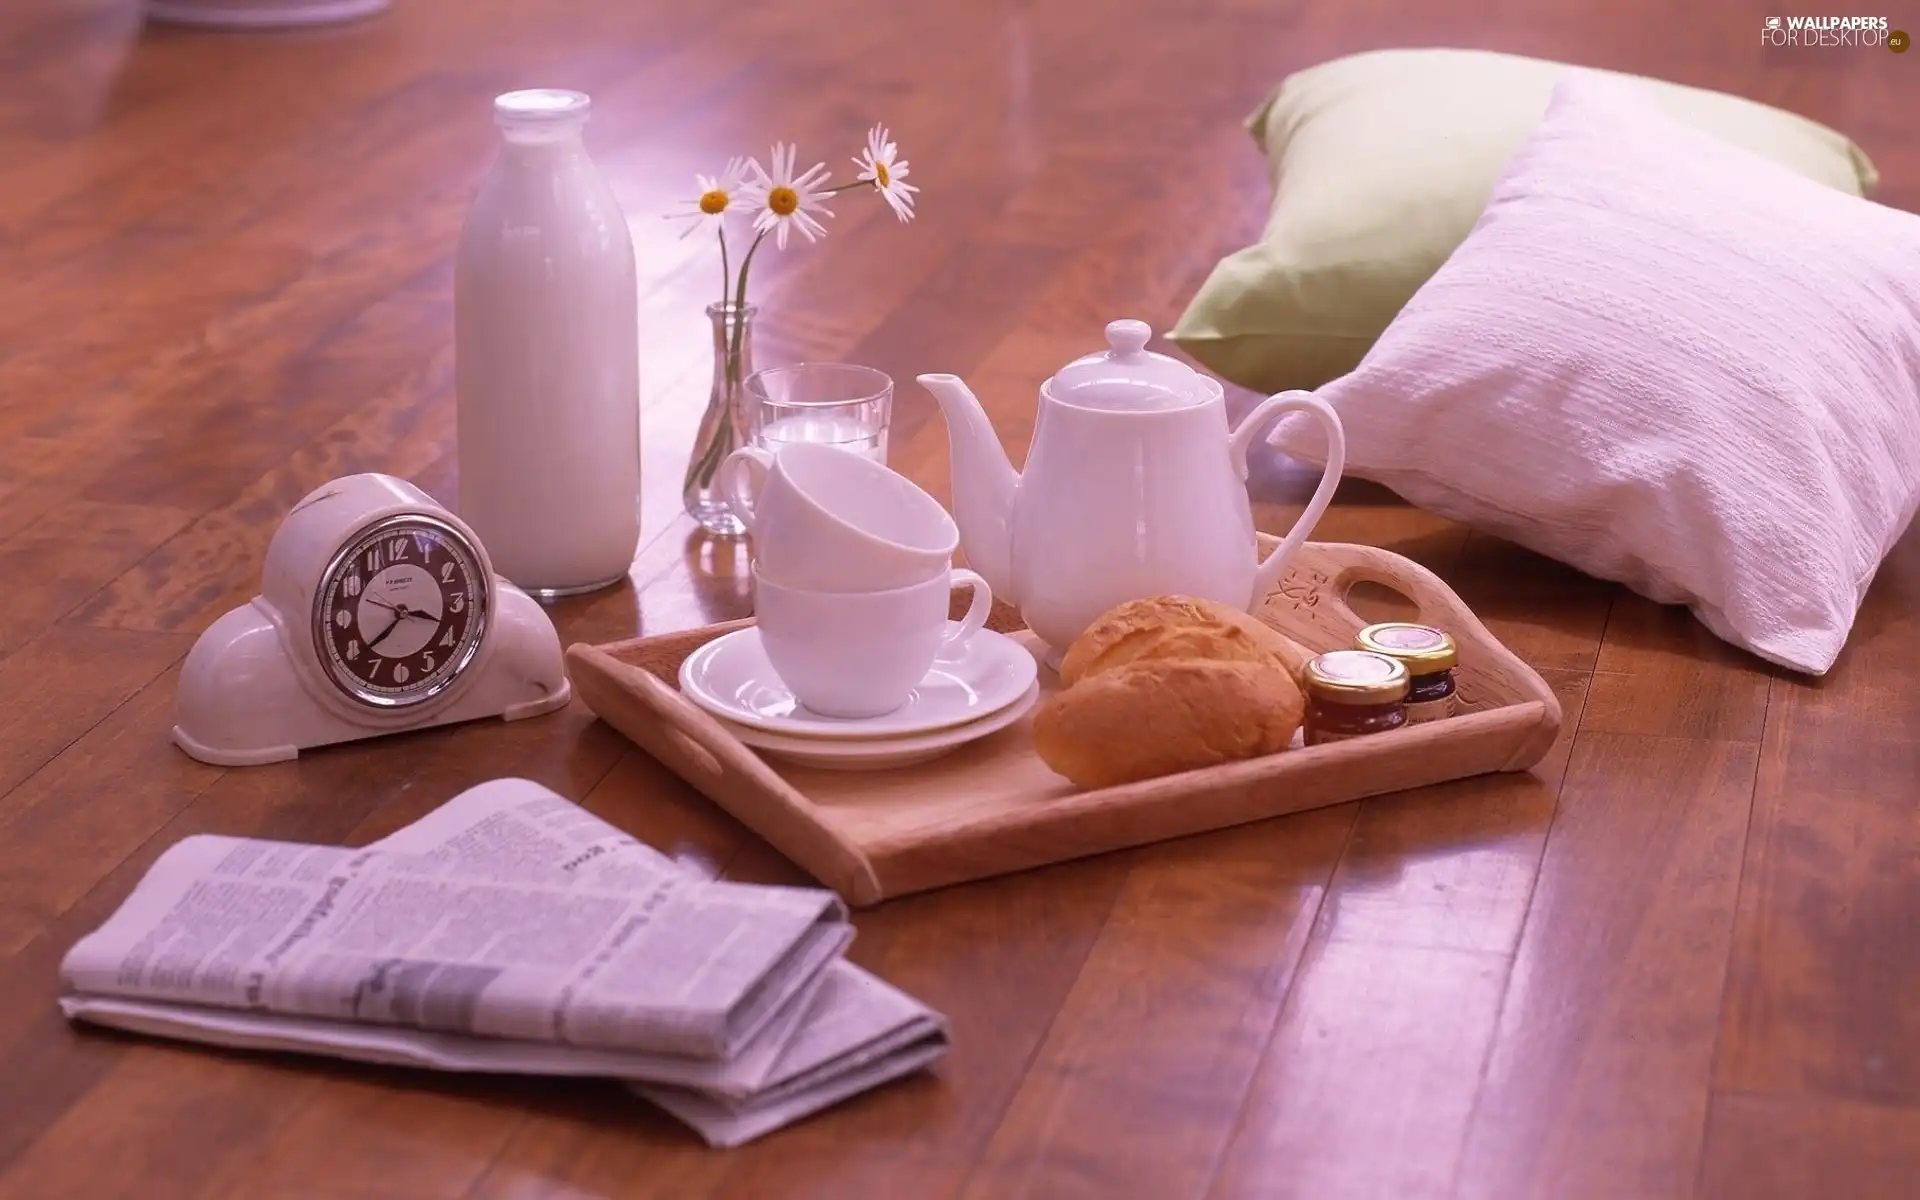 alarm clock, pillows, White, china, breakfast, milk